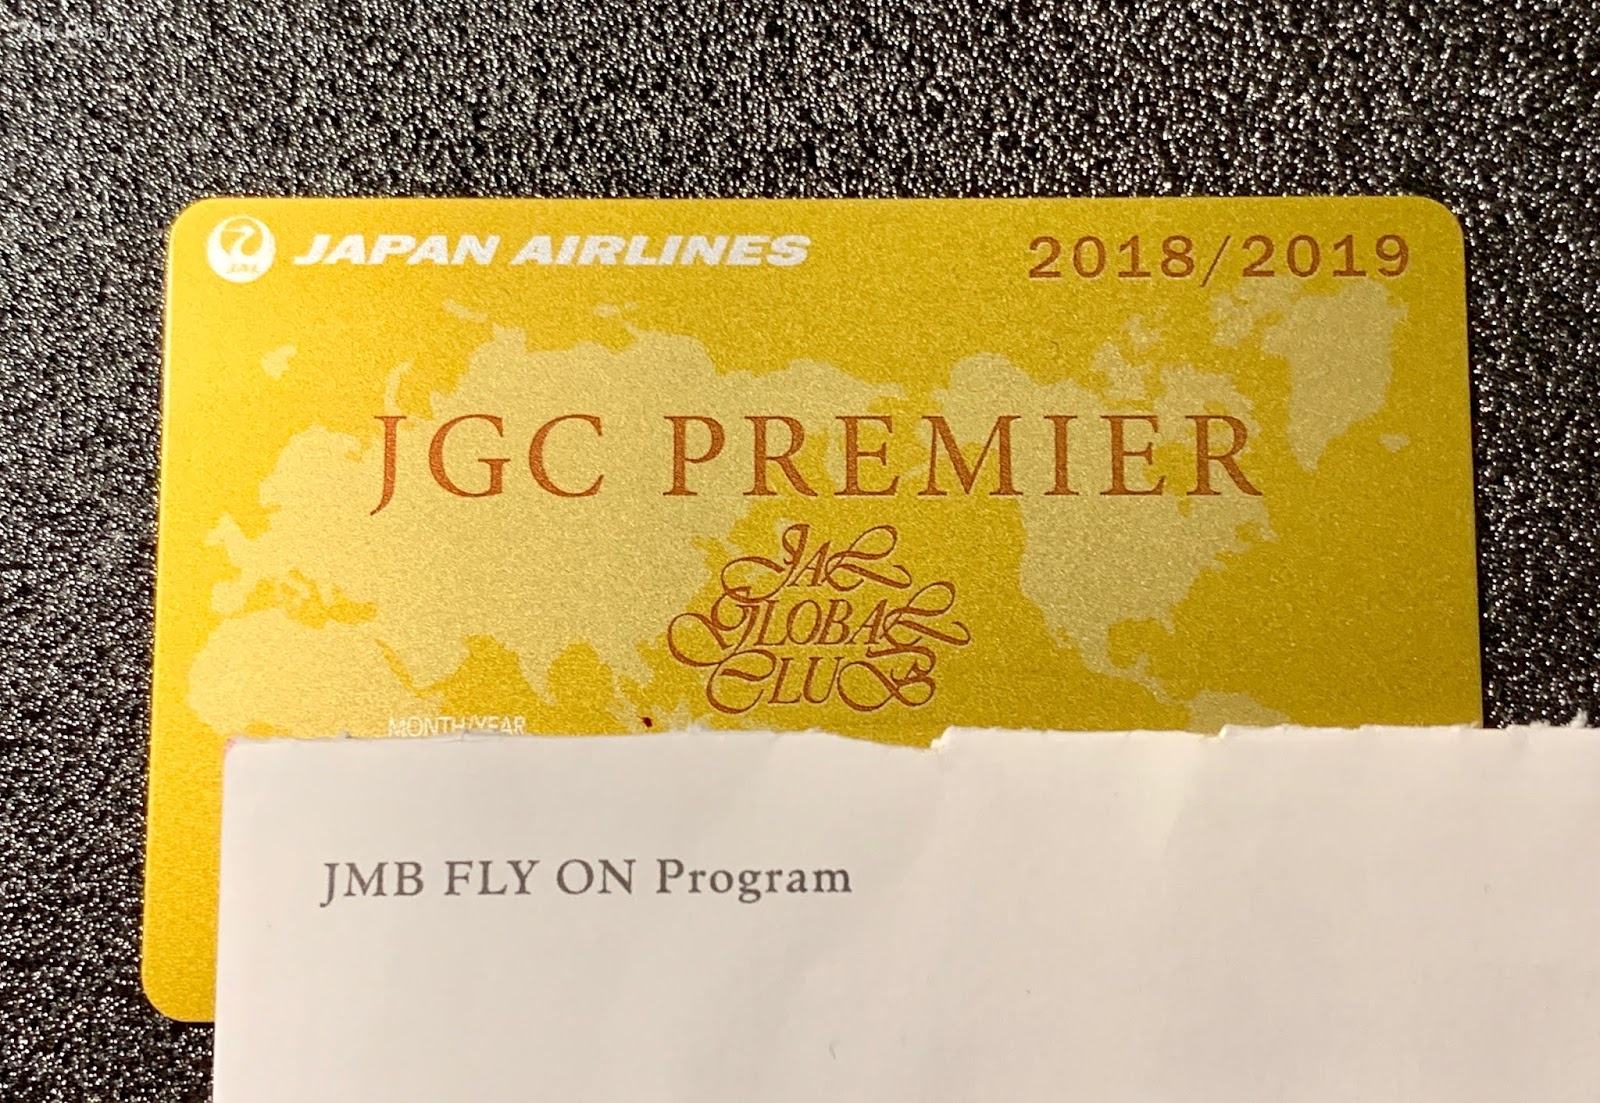 JGC PREMIER Card